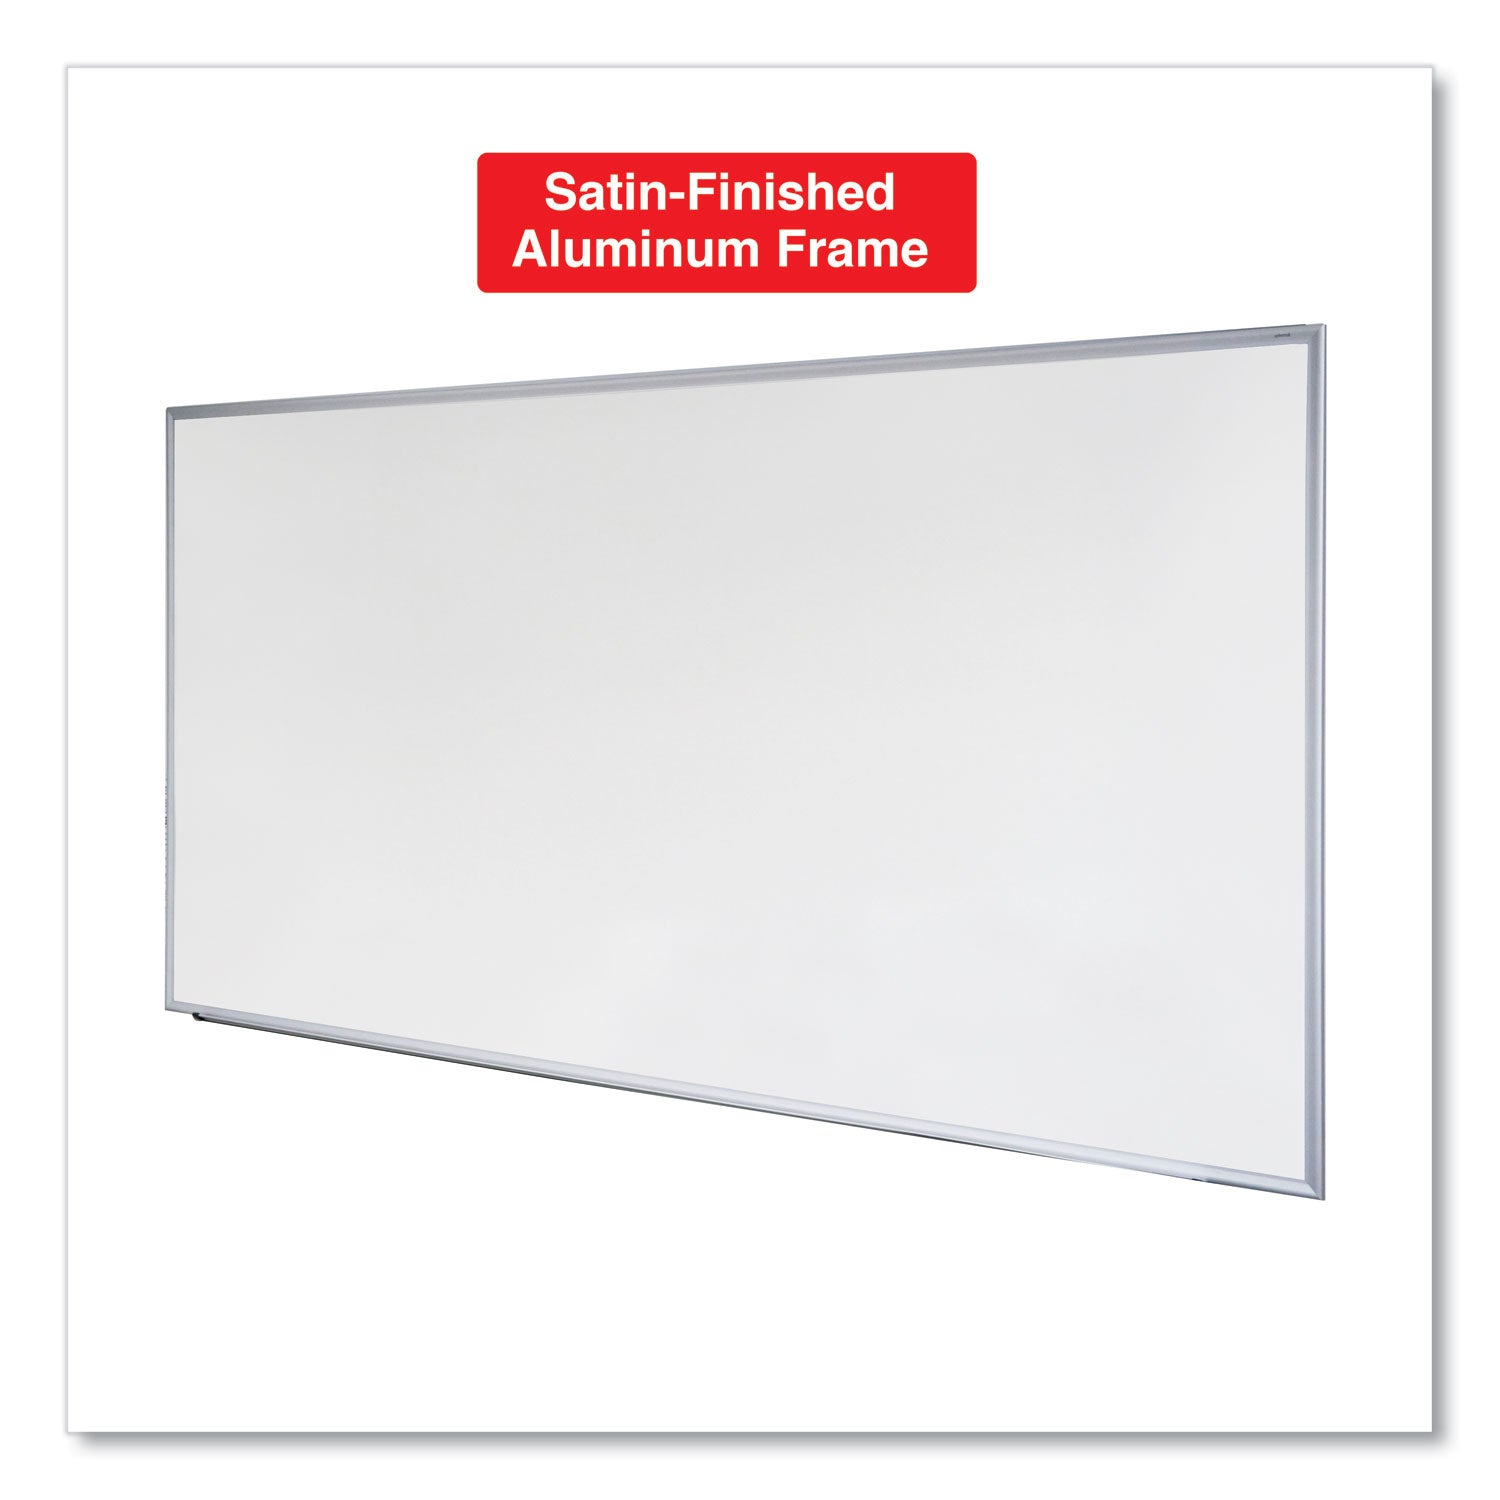 Deluxe Melamine Dry Erase Board, 72 x 48, Melamine White Surface, Silver Anodized Aluminum Frame - 